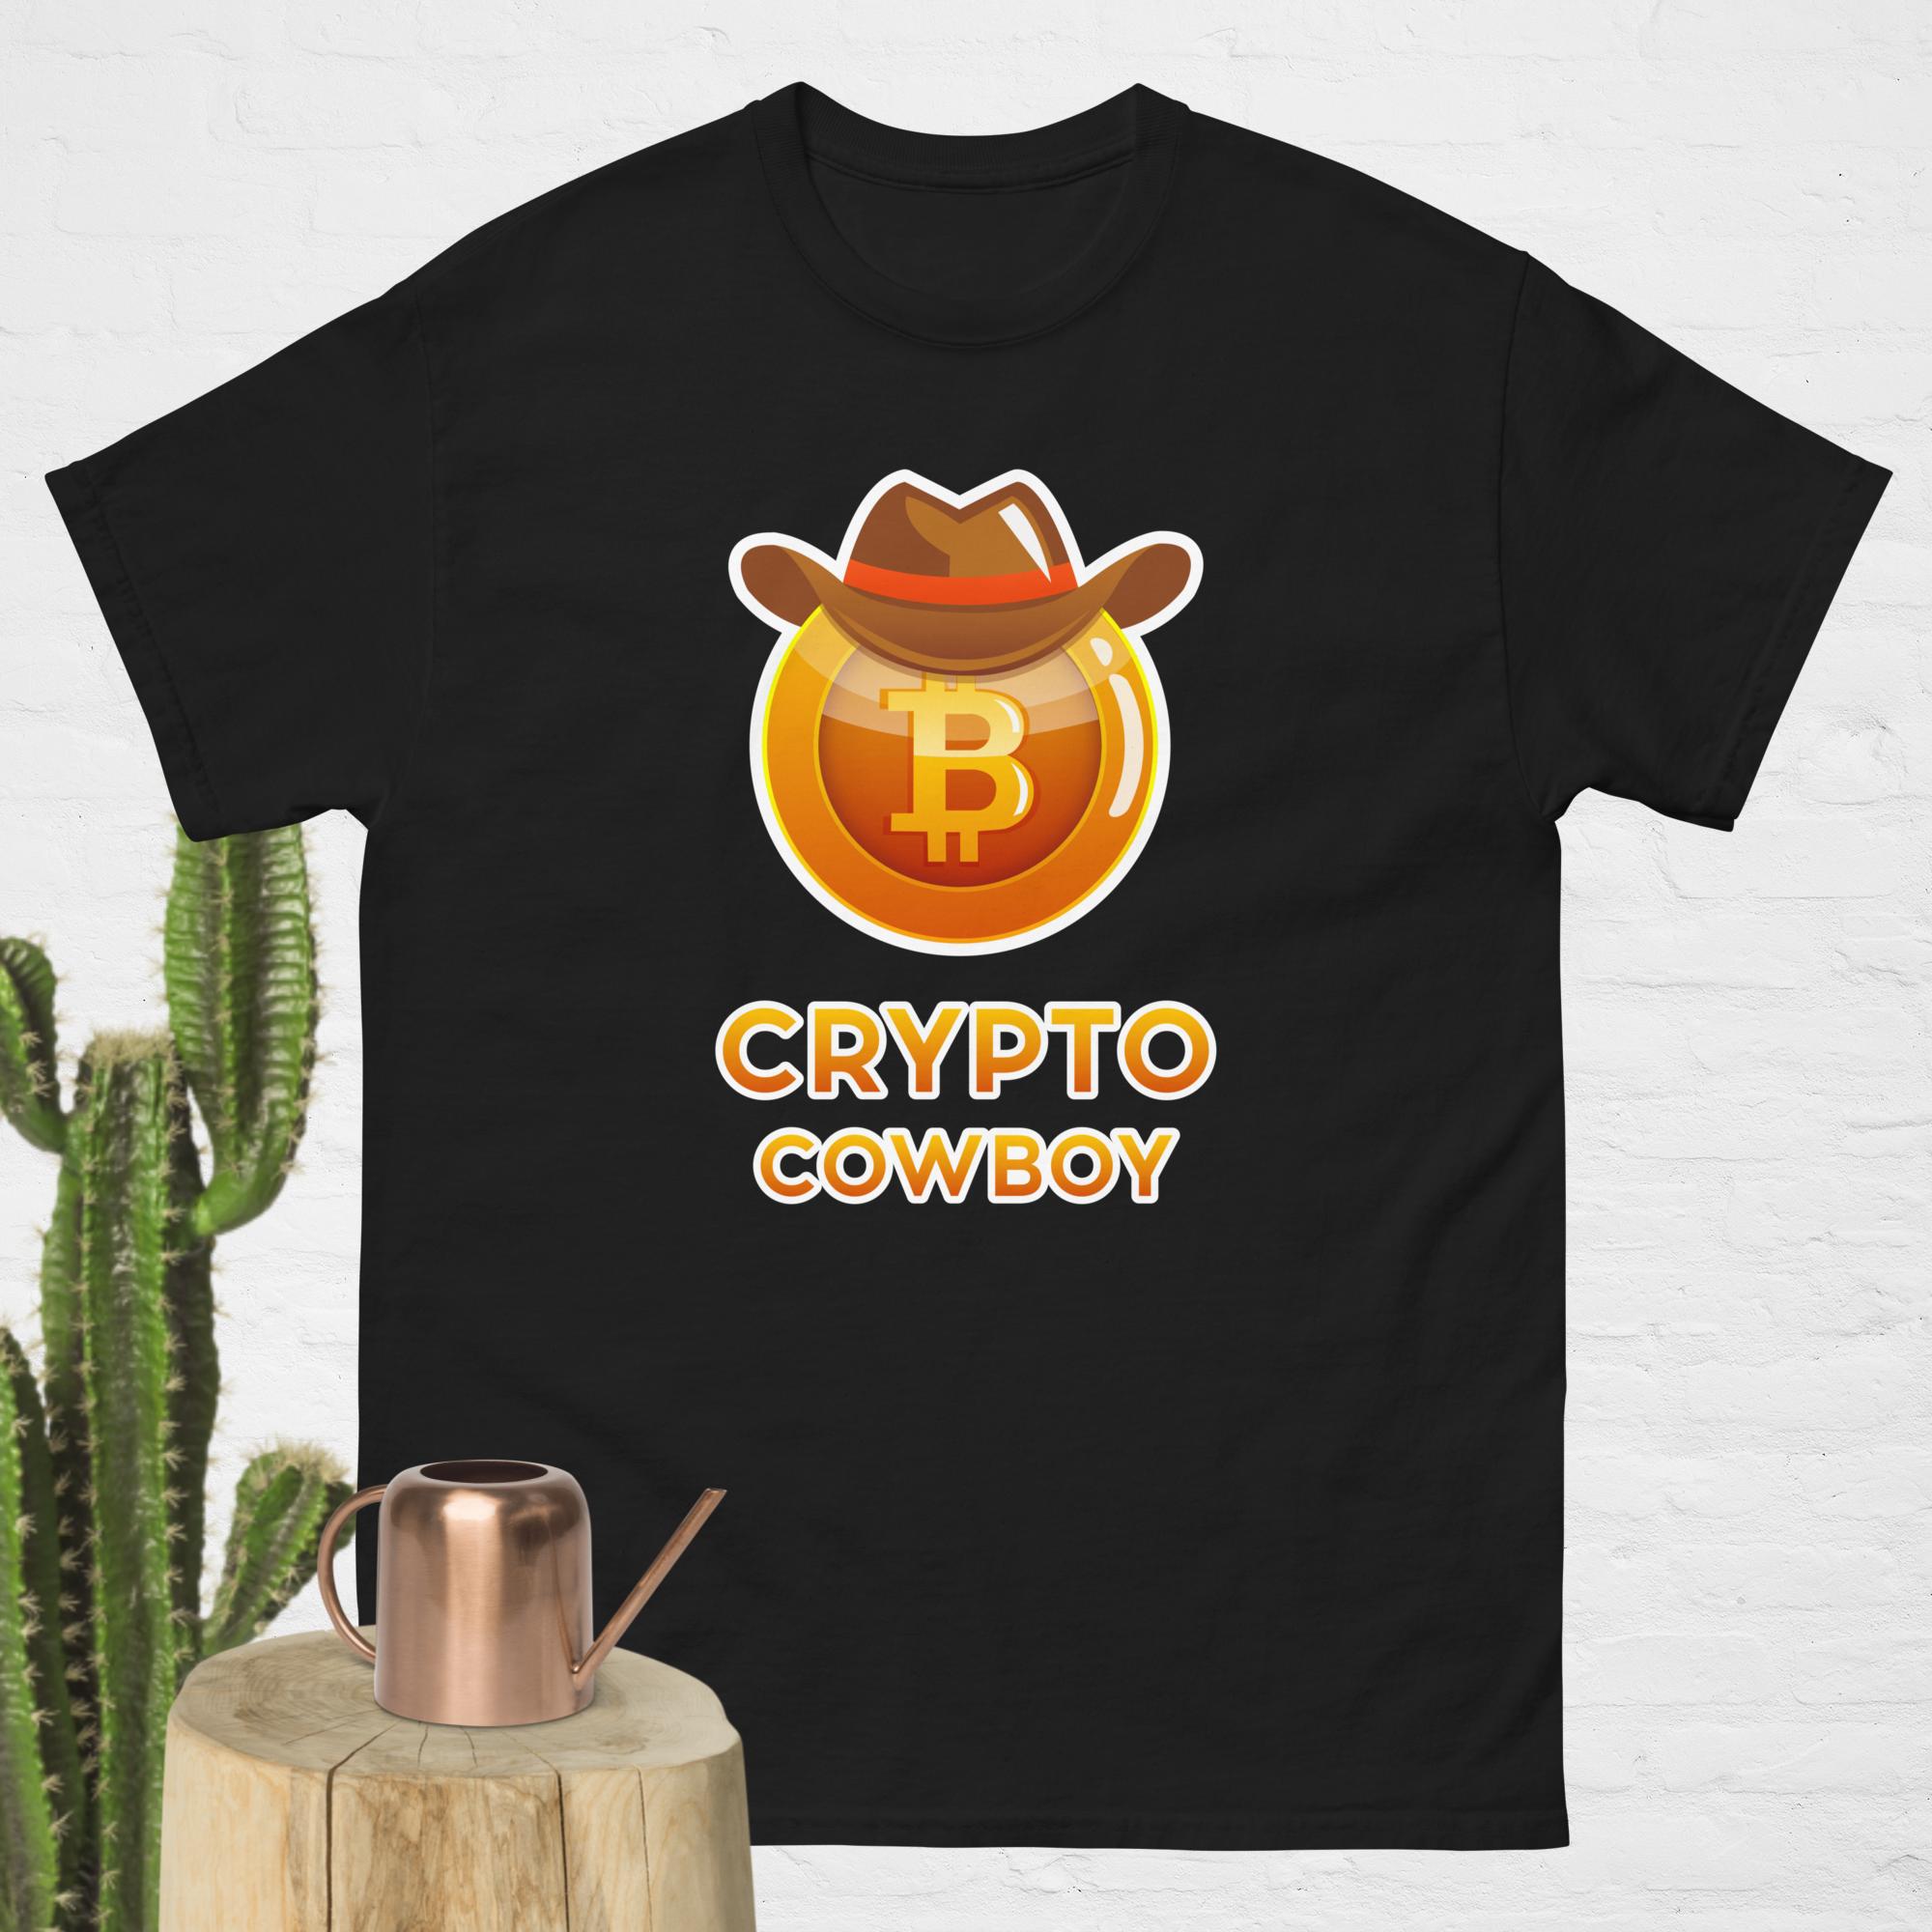 Crypto Cowboy – Men’s classic tee